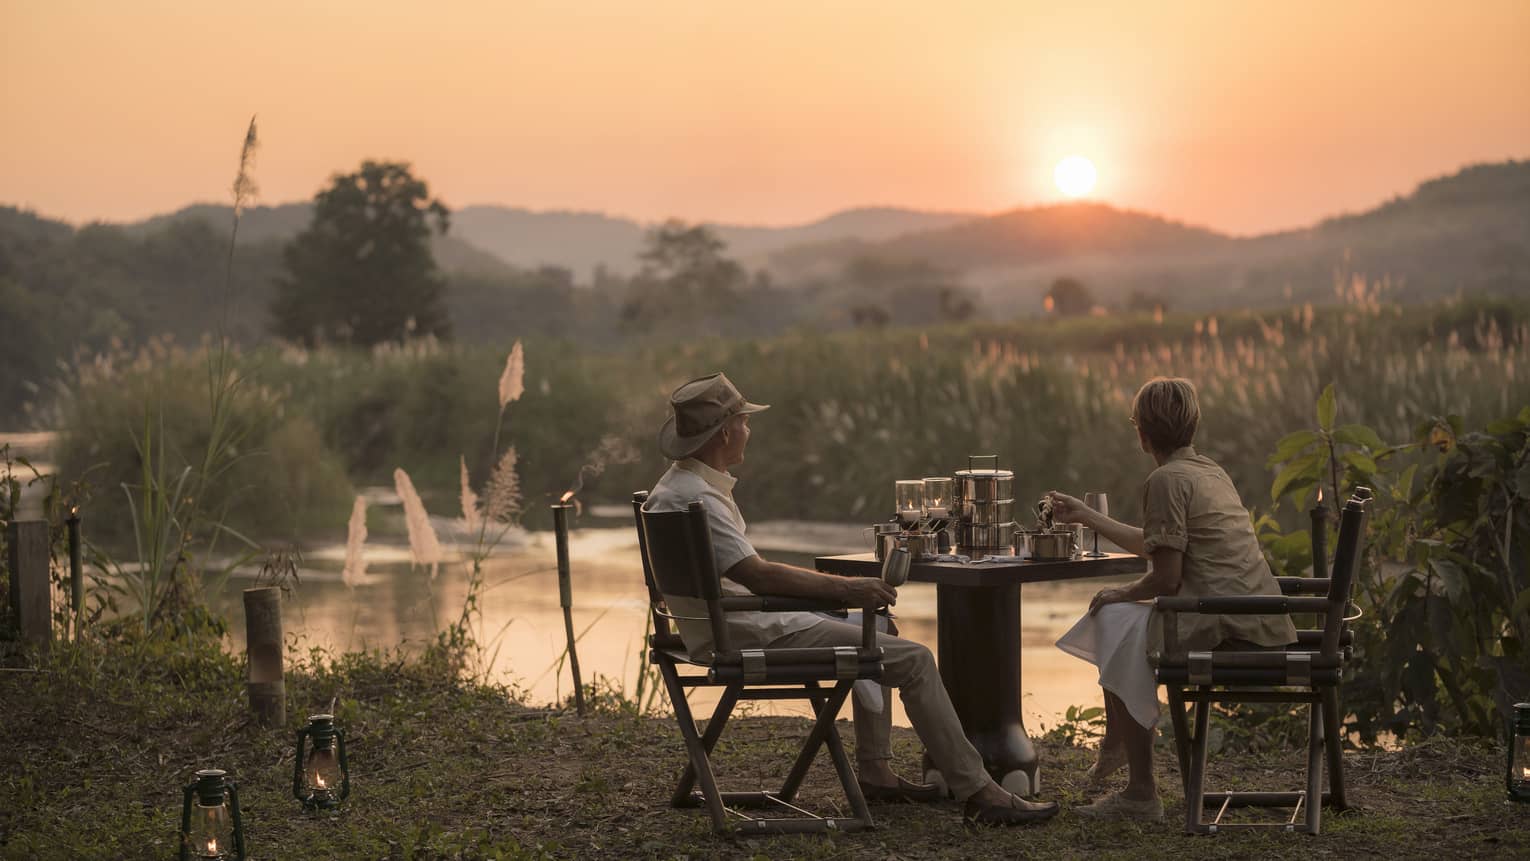 Couple enjoys Camp Bush Dinner along river at sunset